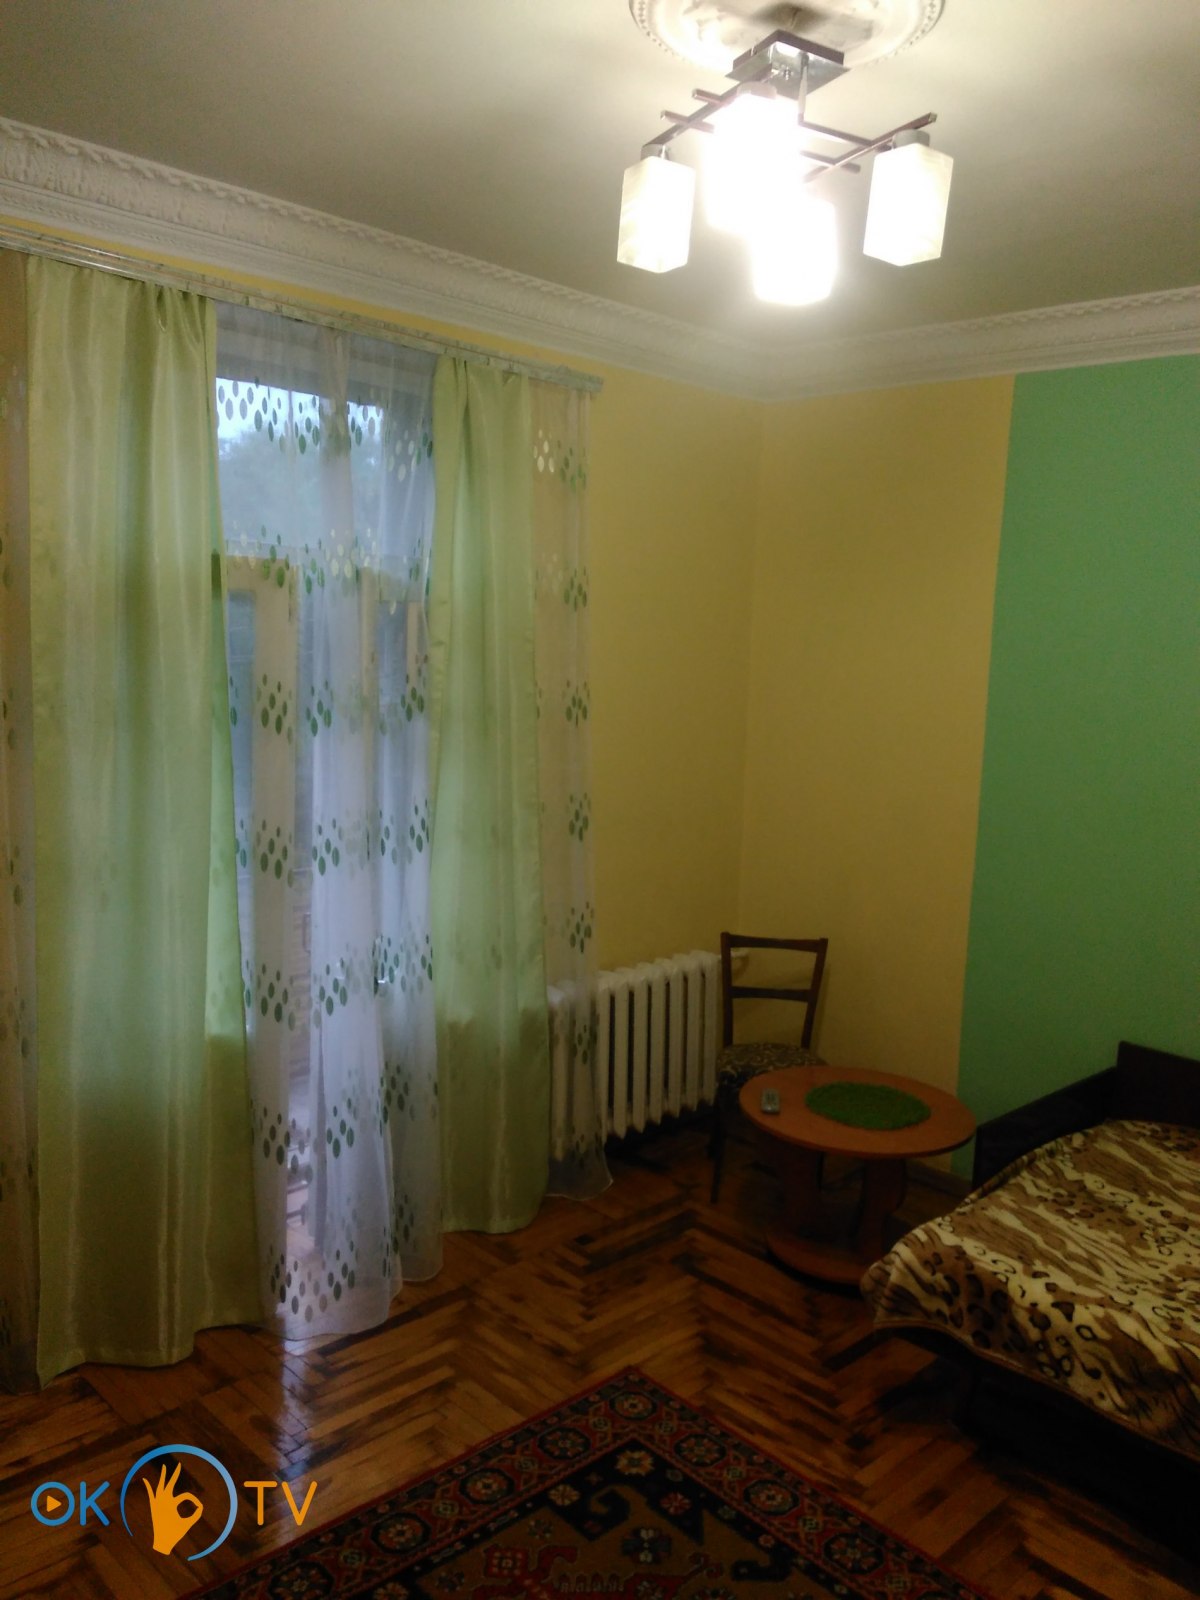 Двухкомнатная квартира в центре Запорожья фото 2